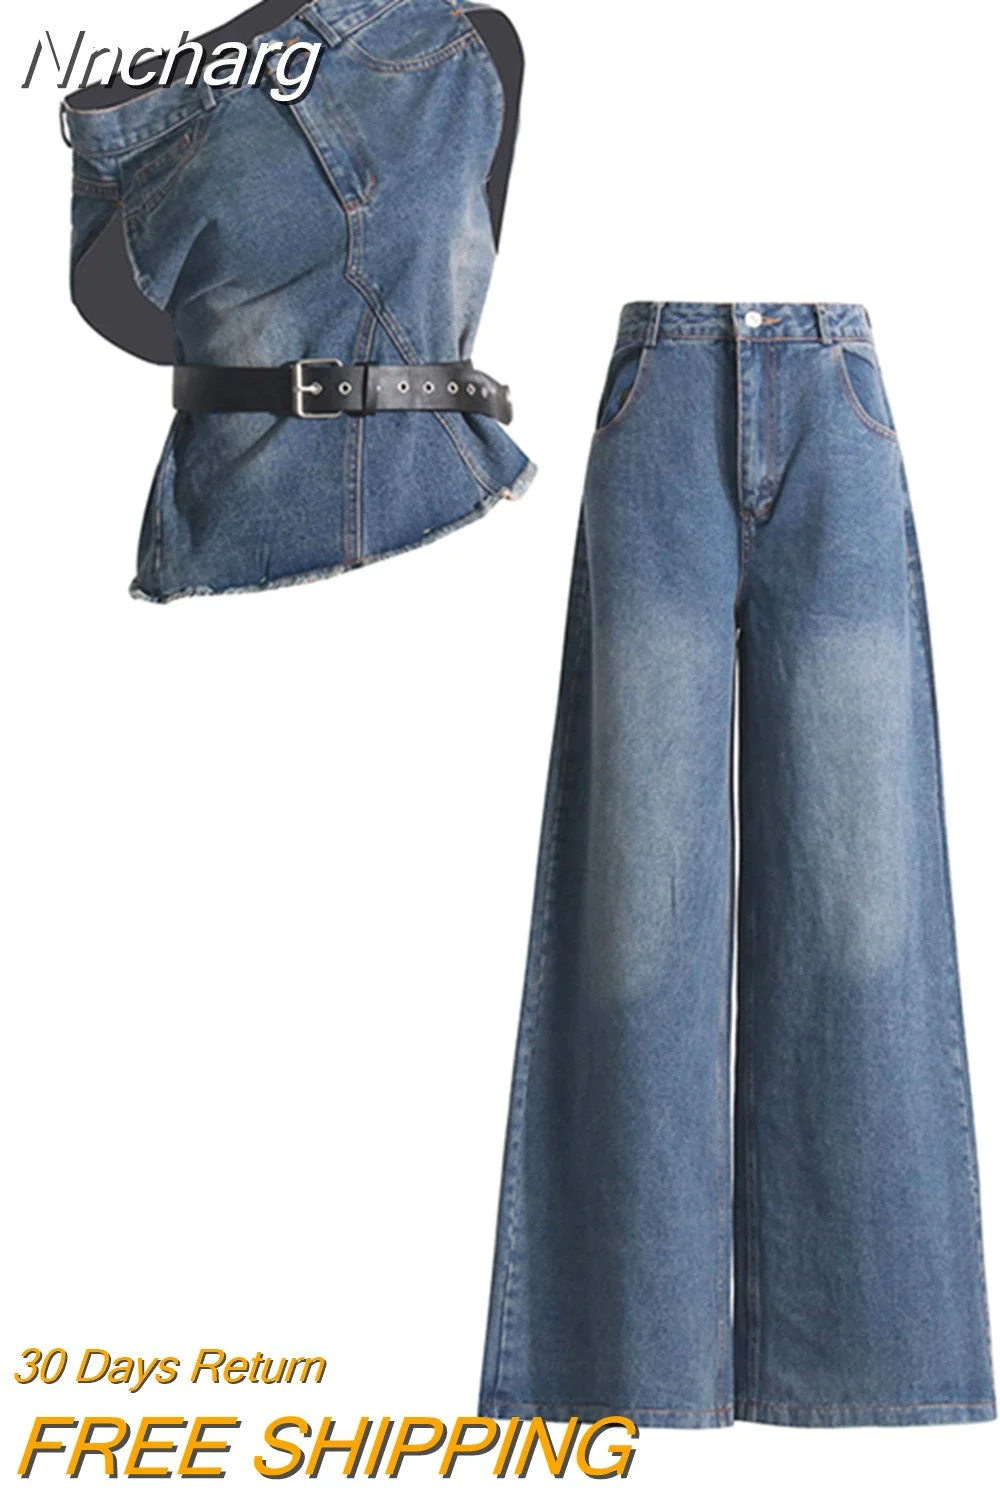 Nncharge Denim Two Piece Sets For Women Slash Neck Irregular Tops High Waist Split Jeans Summer Set Female Fashion Clothes